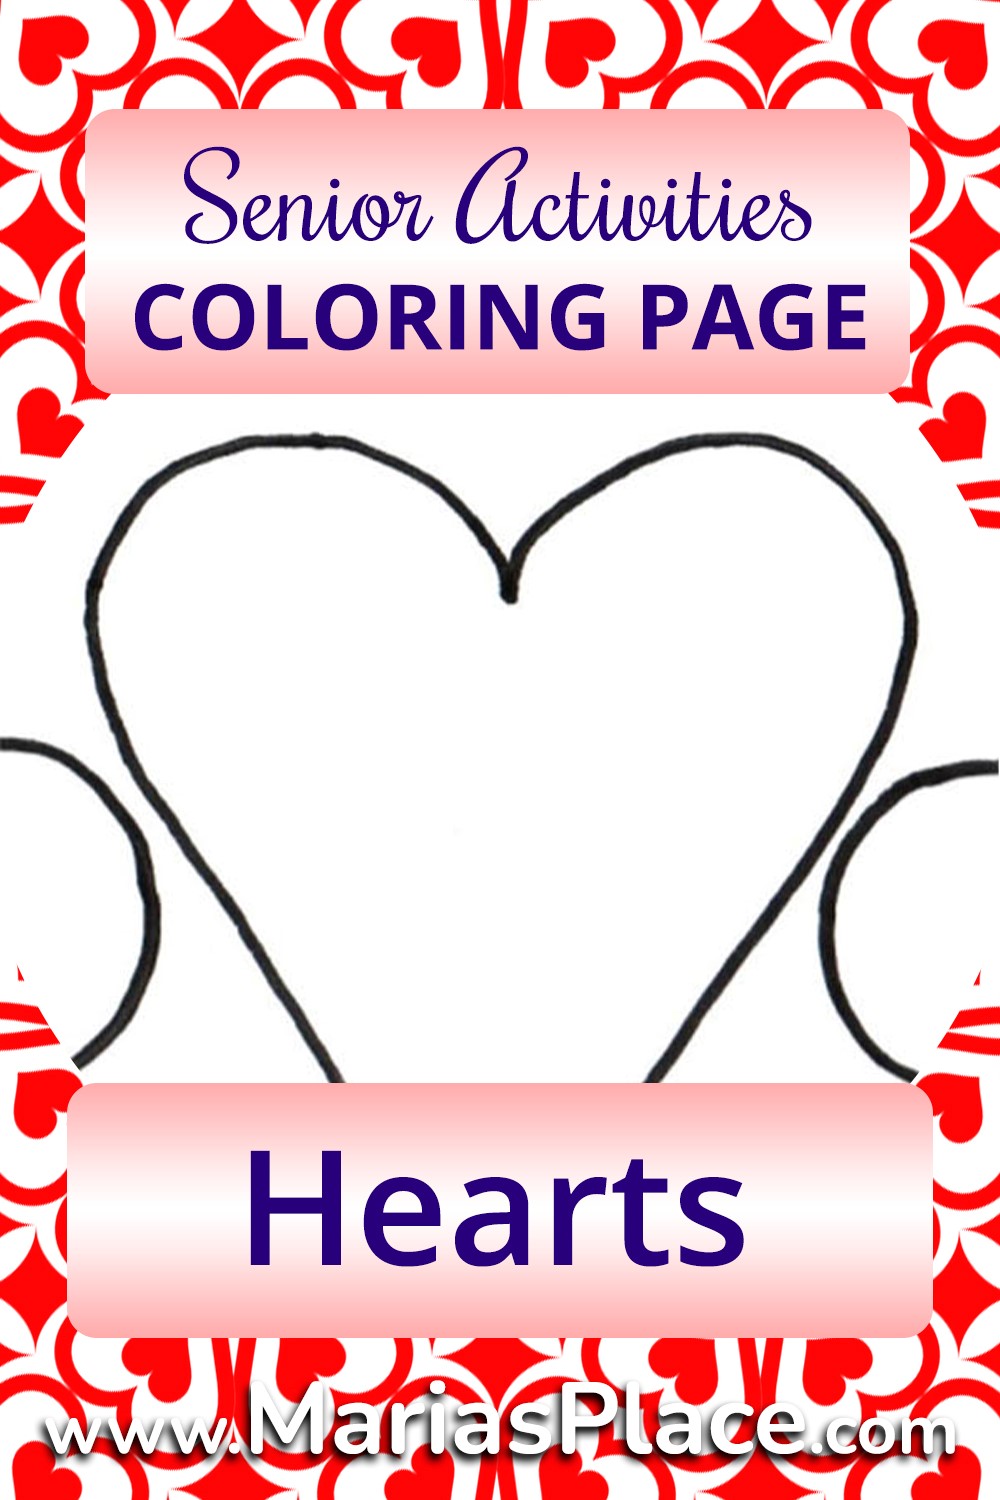 Coloring – Hearts